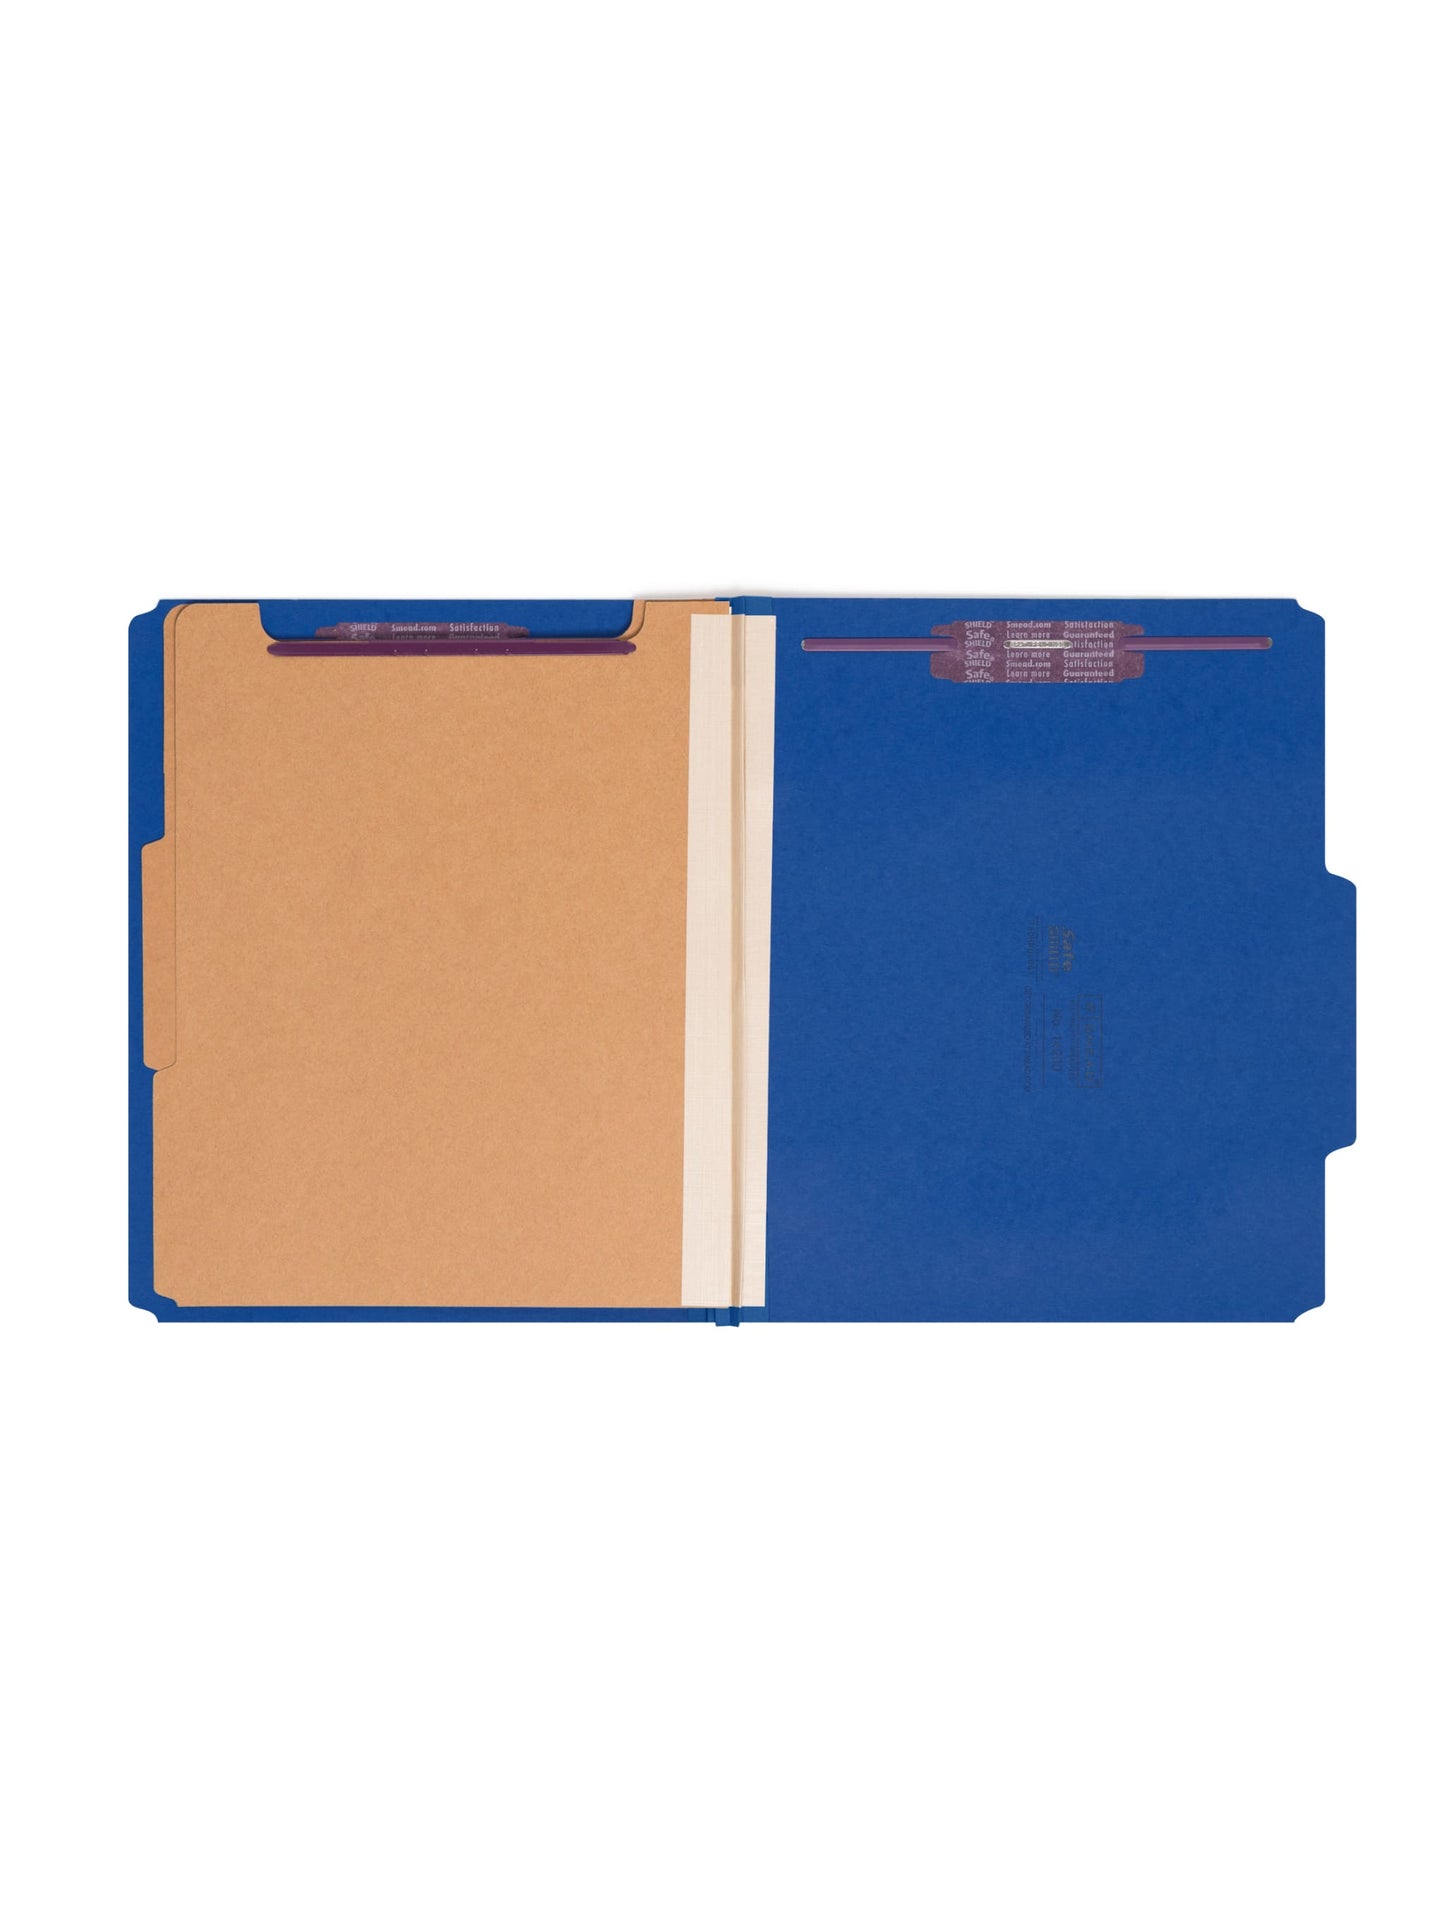 SafeSHIELD® Premium Pressboard Classification File Folders, 2 Dividers, 2 inch Expansion, 2/5-Cut Tab, Dark Blue Color, Letter Size, Set of 0, 30086486142008